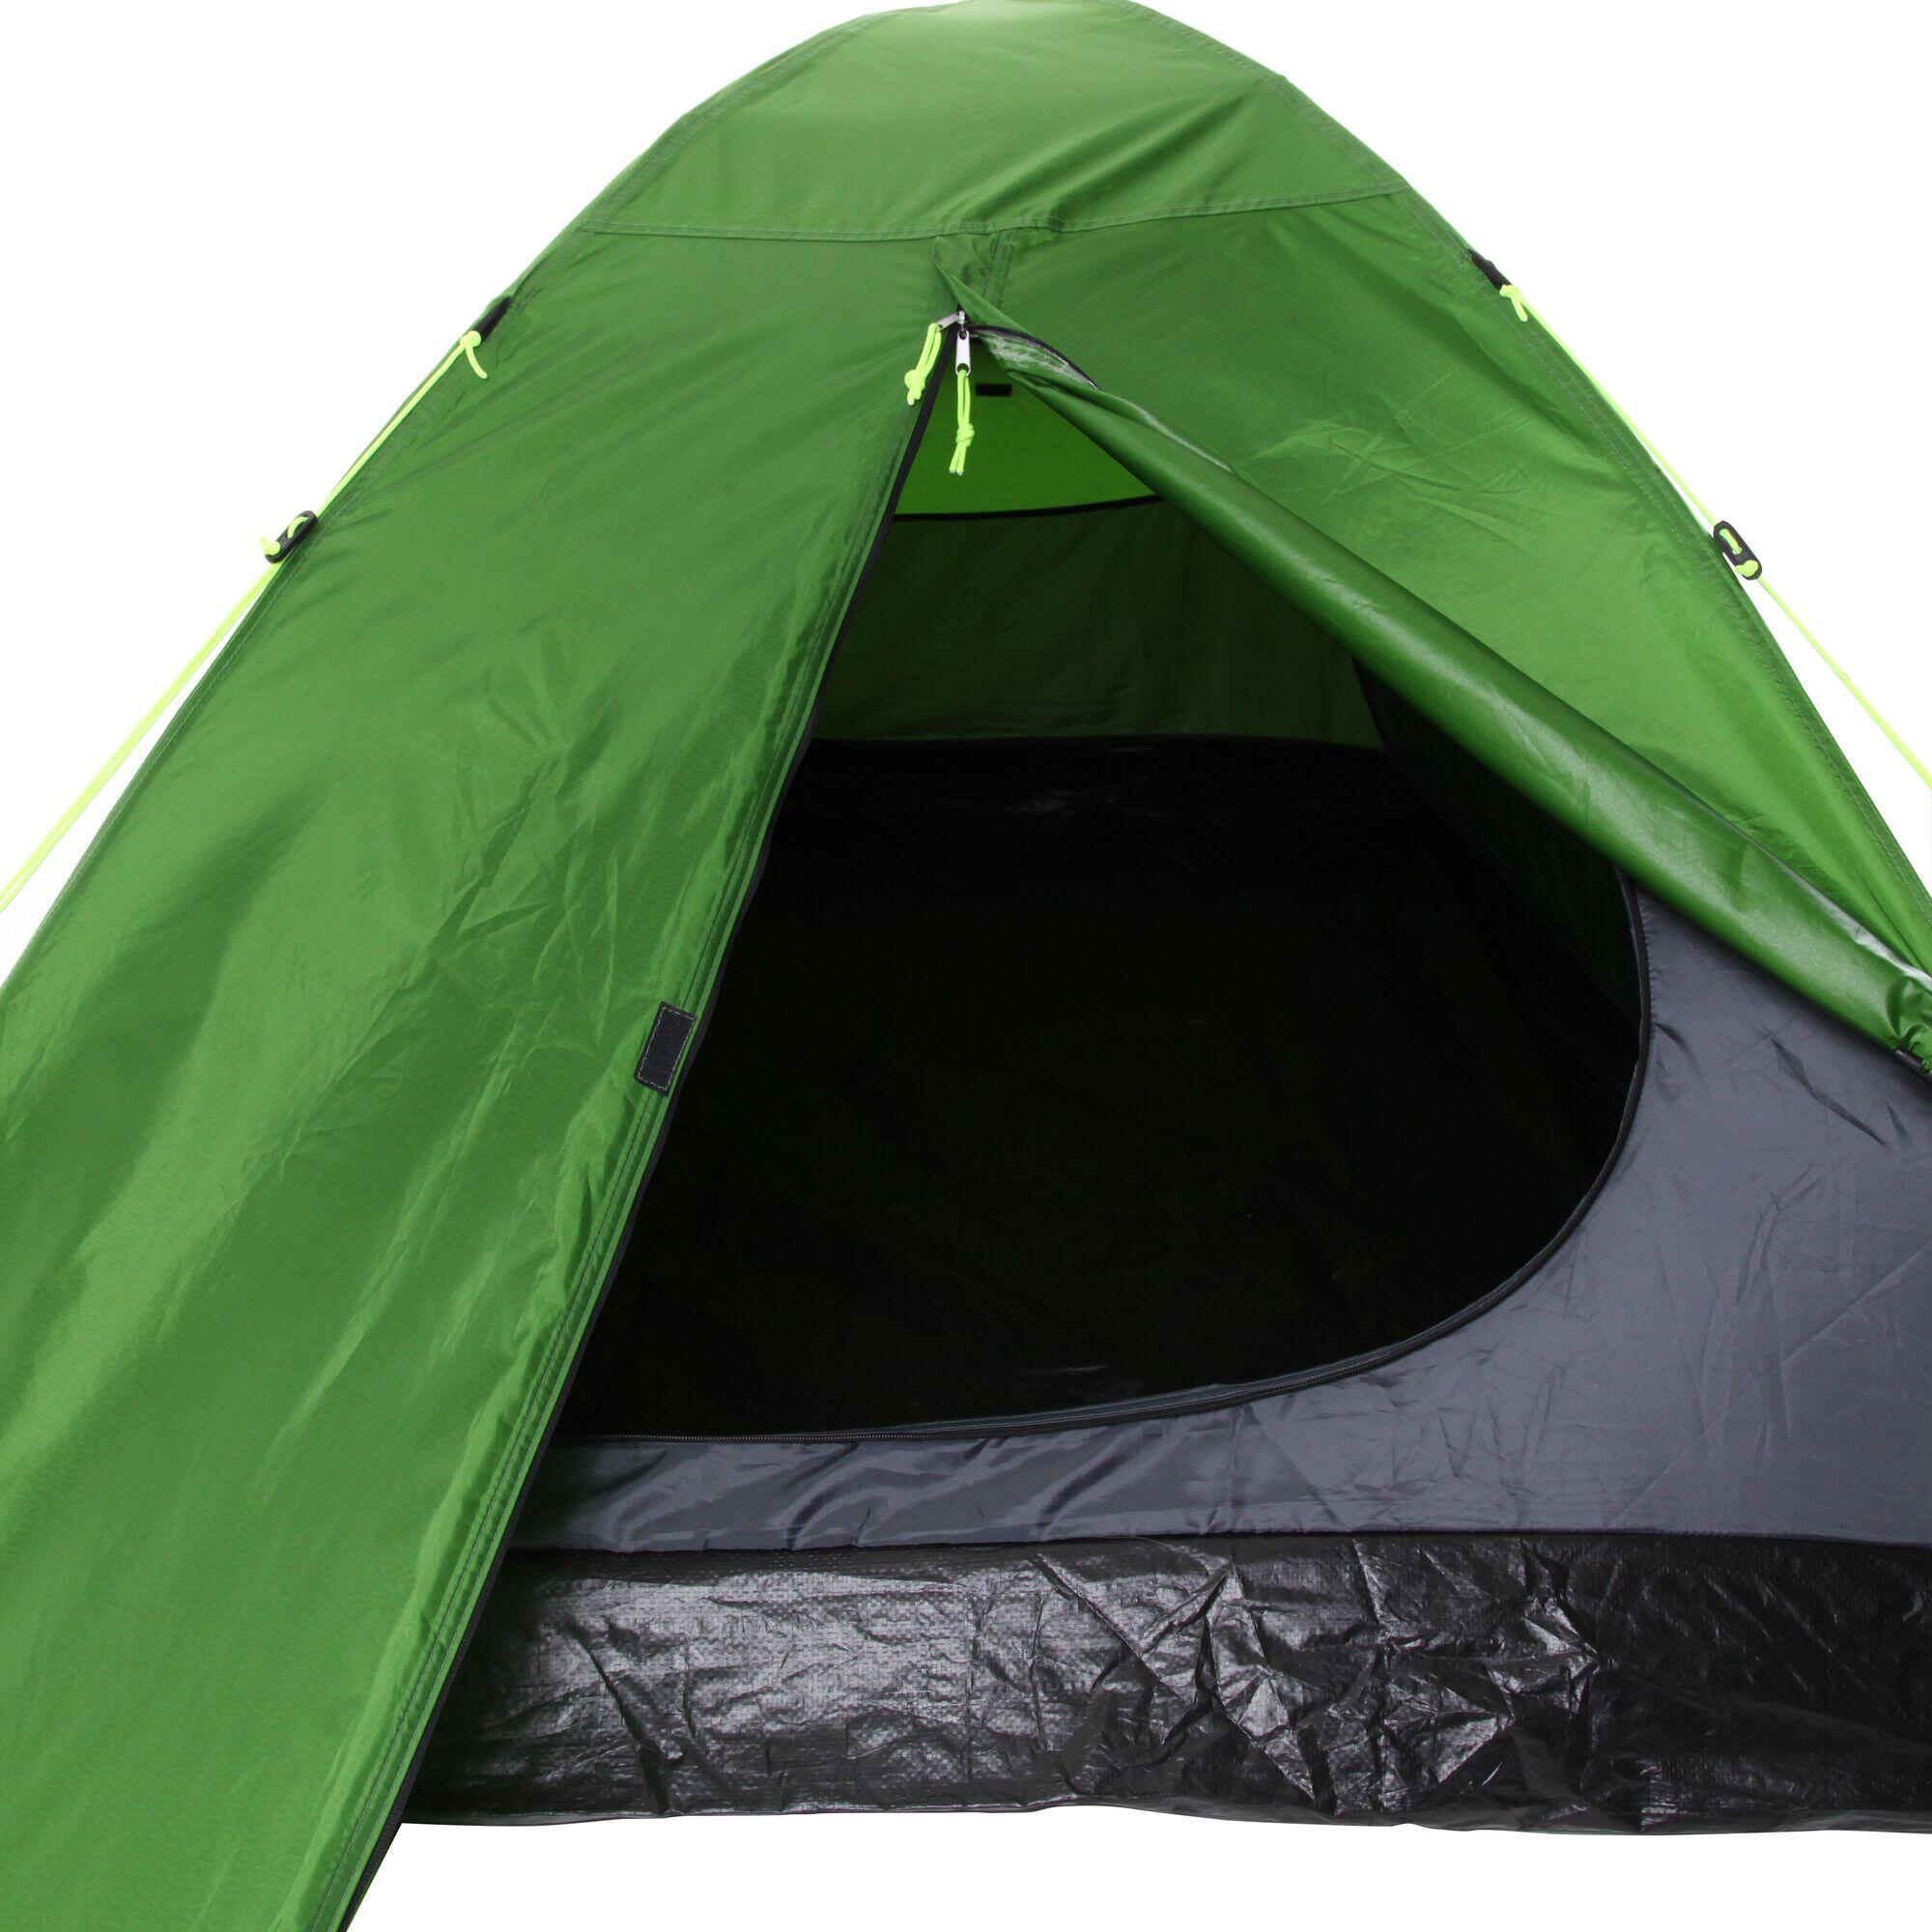 Evogreen 3-Man Adults' Camping Camping Tent 5/5